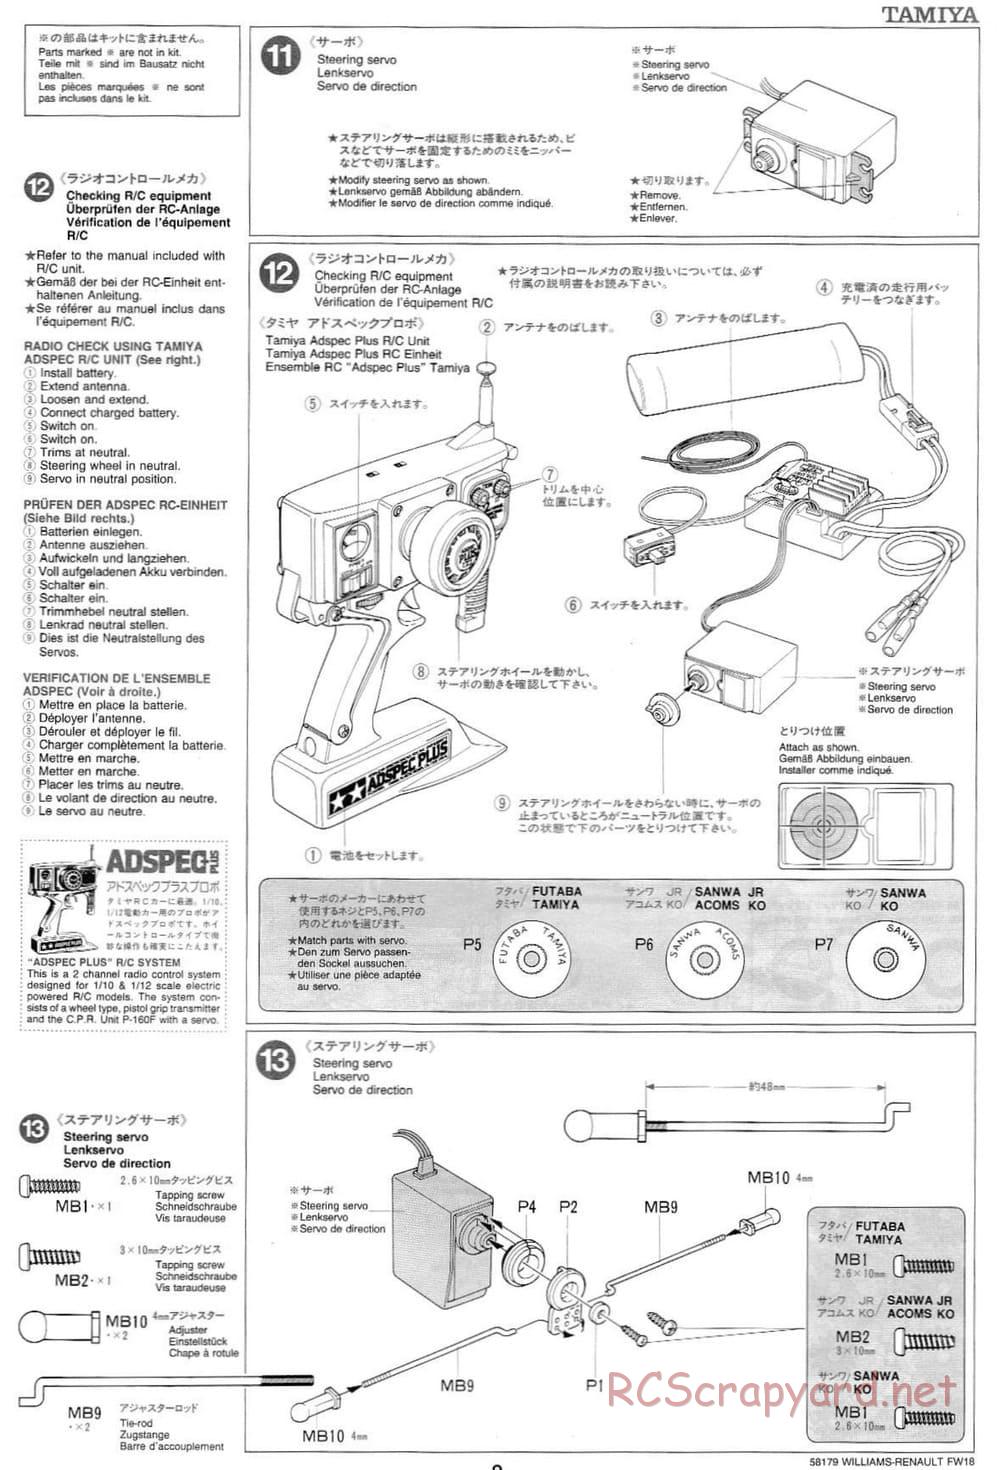 Tamiya - Williams Renault FW18 - F103RS Chassis - Manual - Page 9